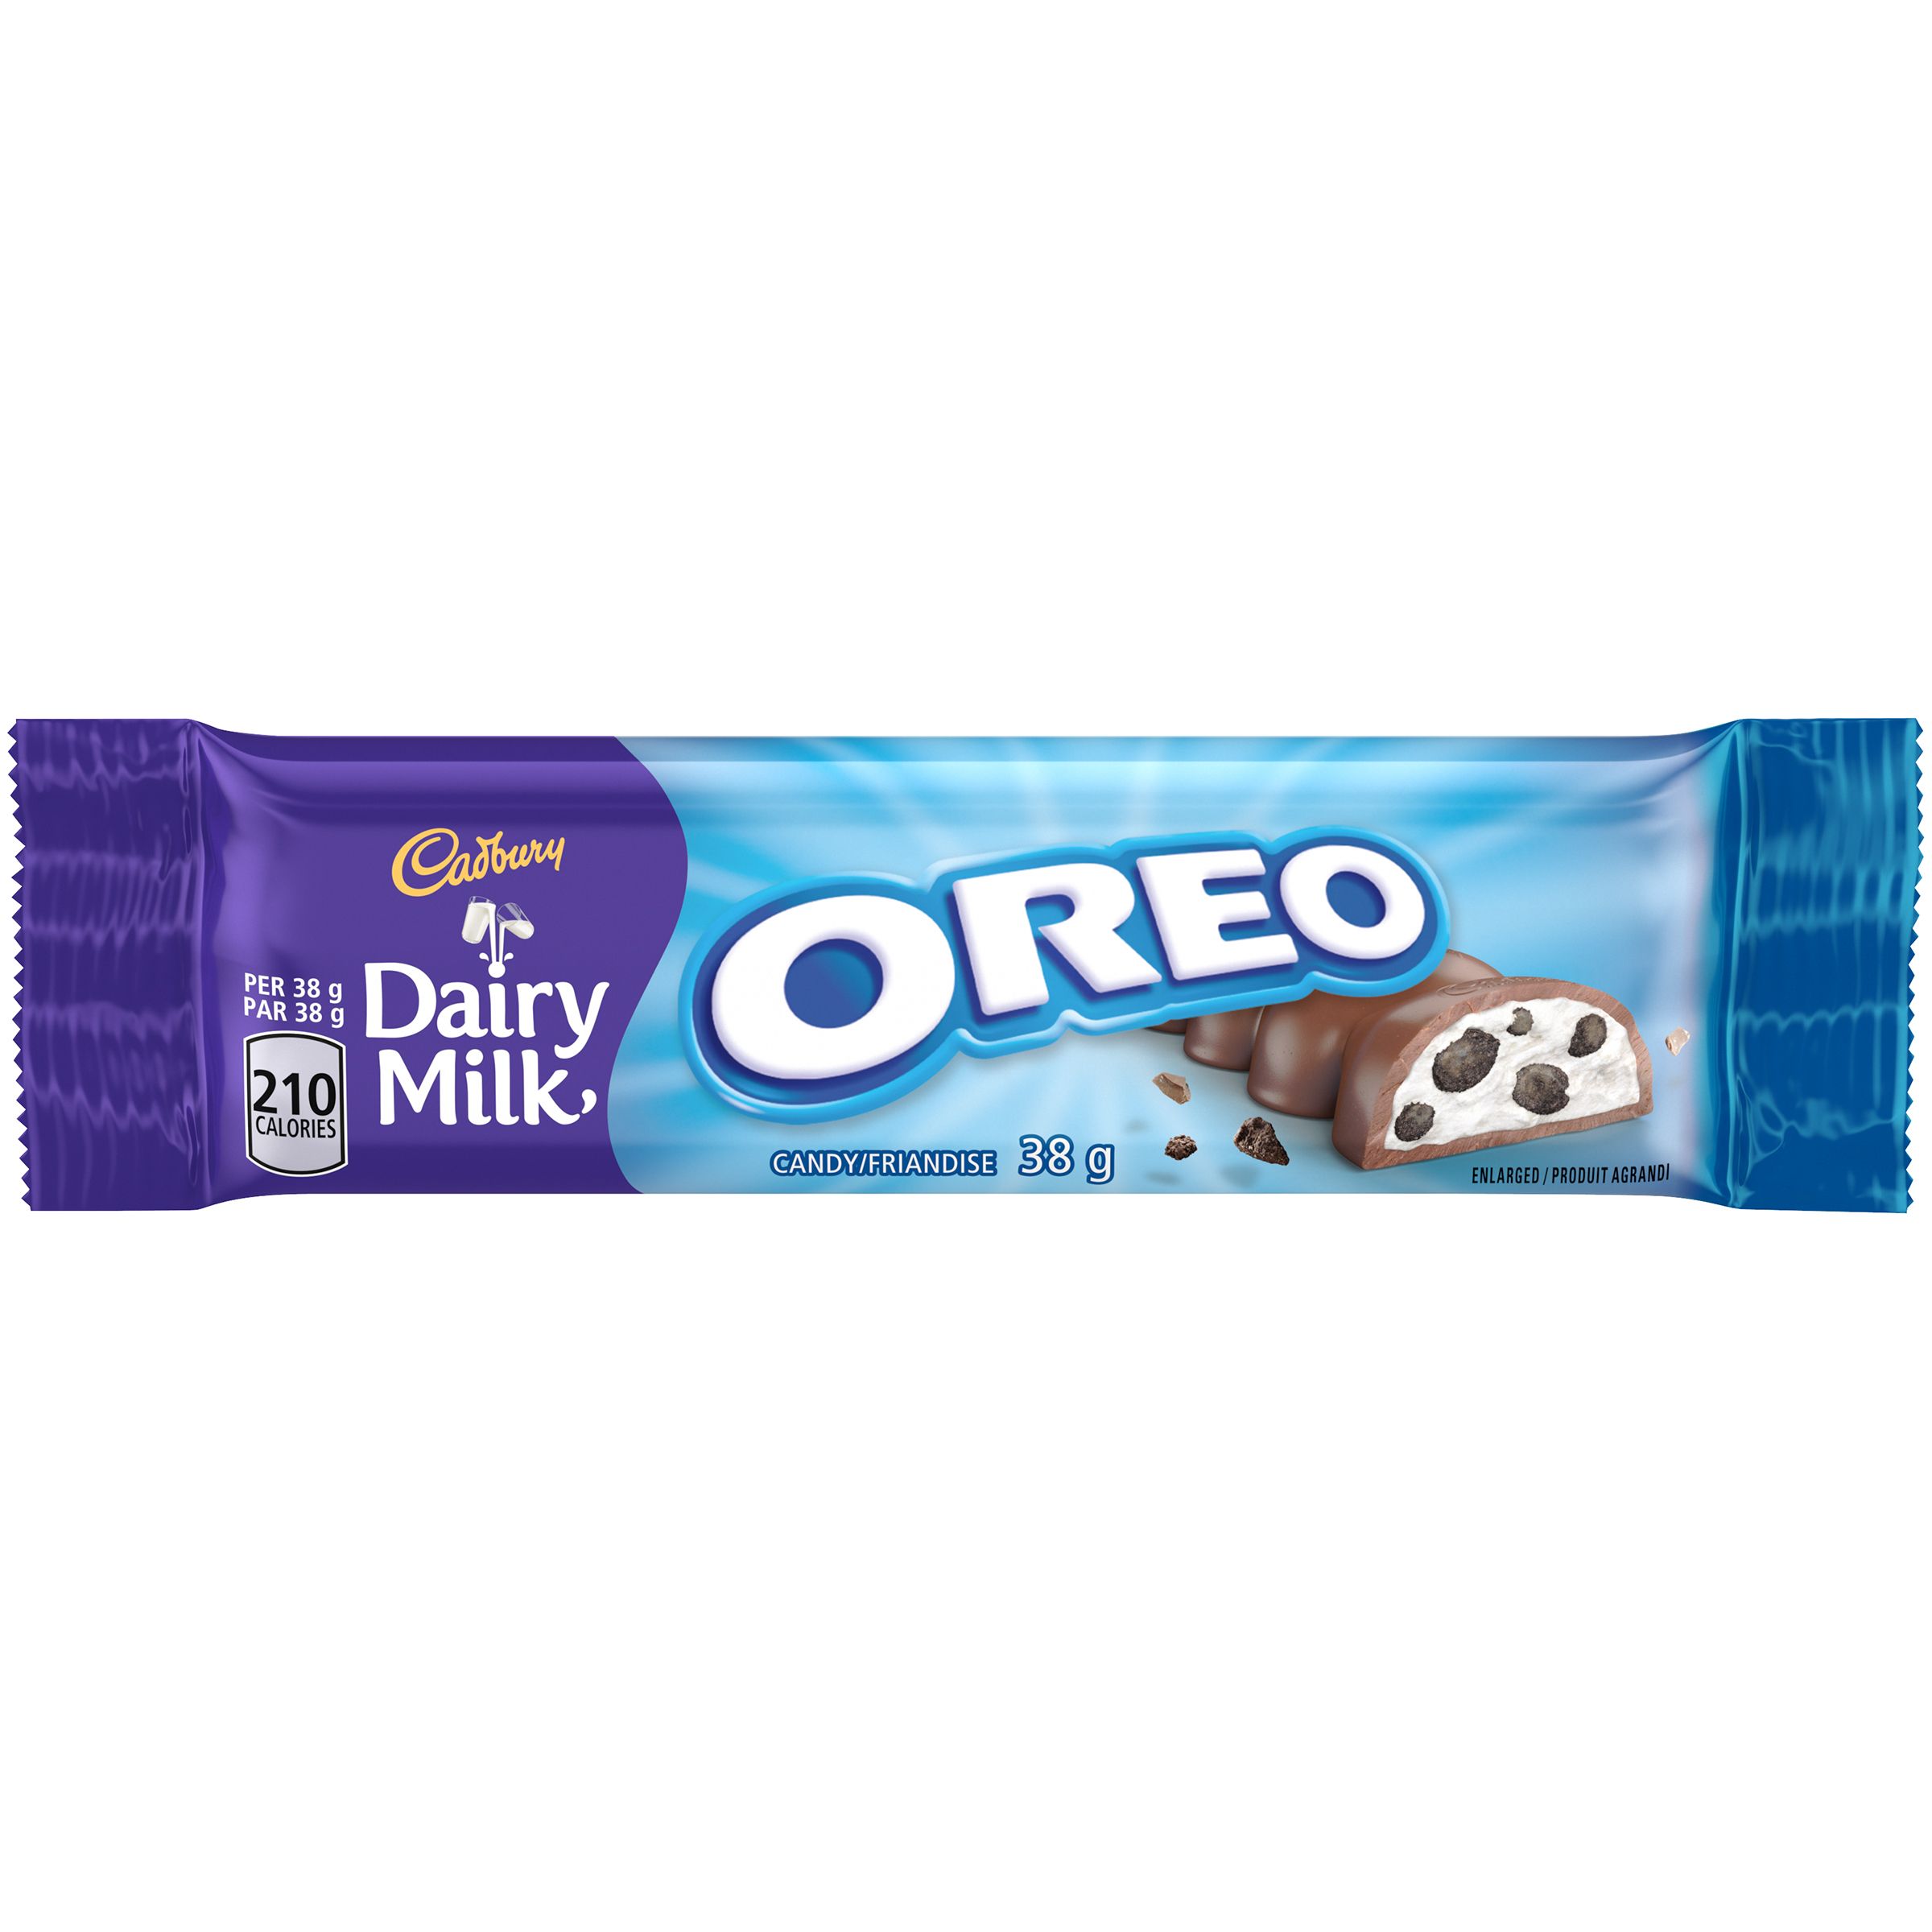 Cadbury Dairy Milk OREO, tablette de 38 g-3